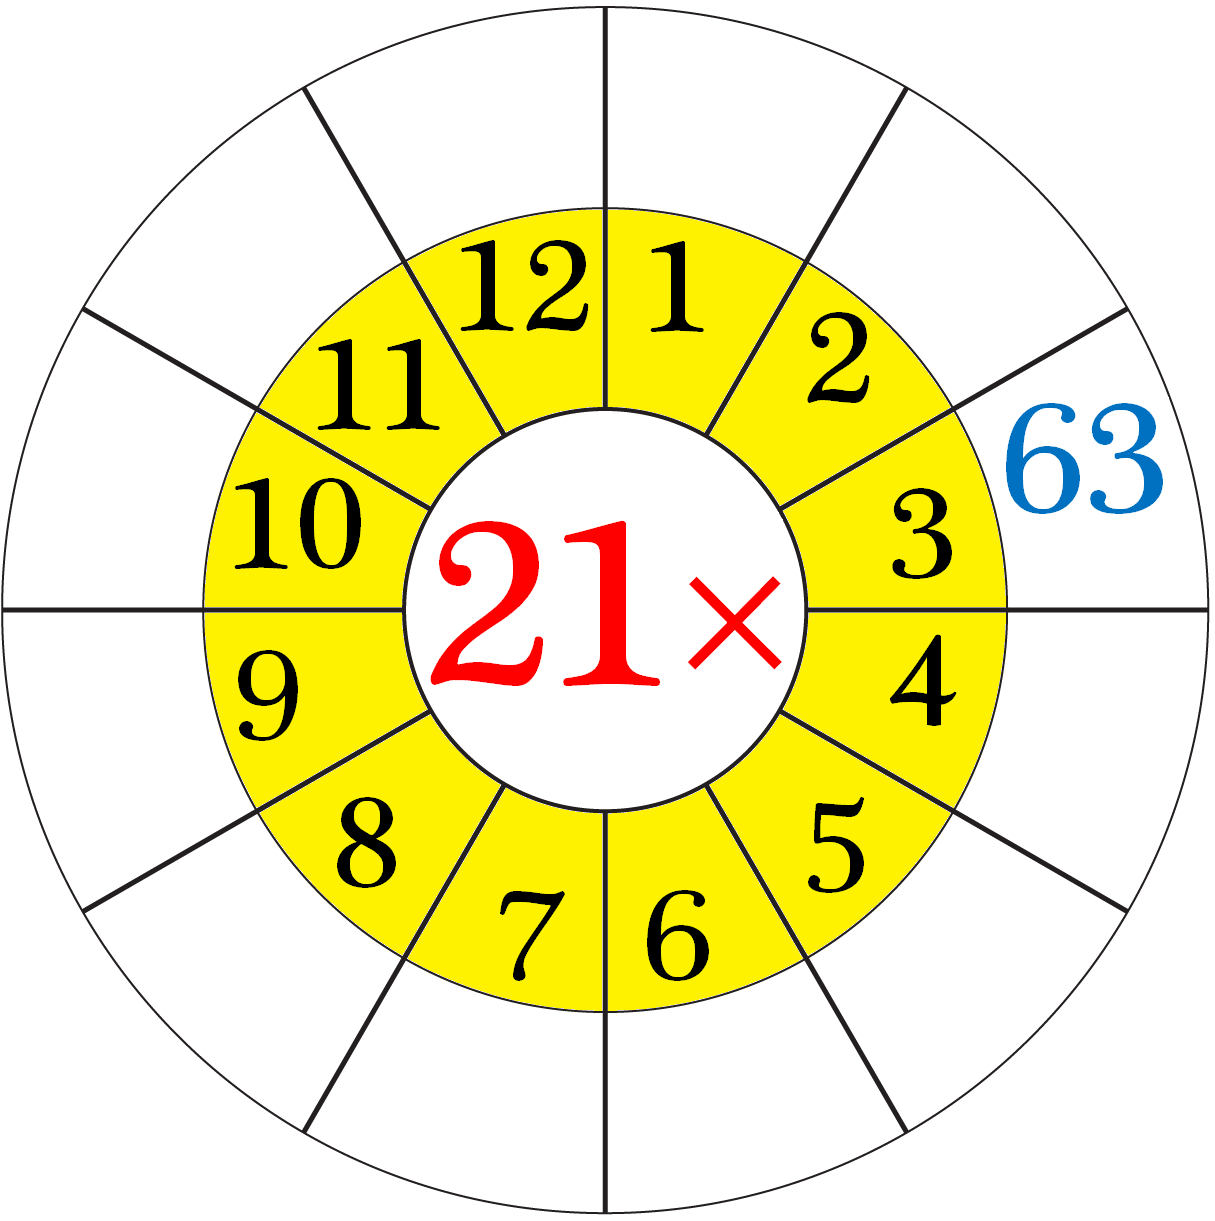 Worksheet on Multiplication Table of 21